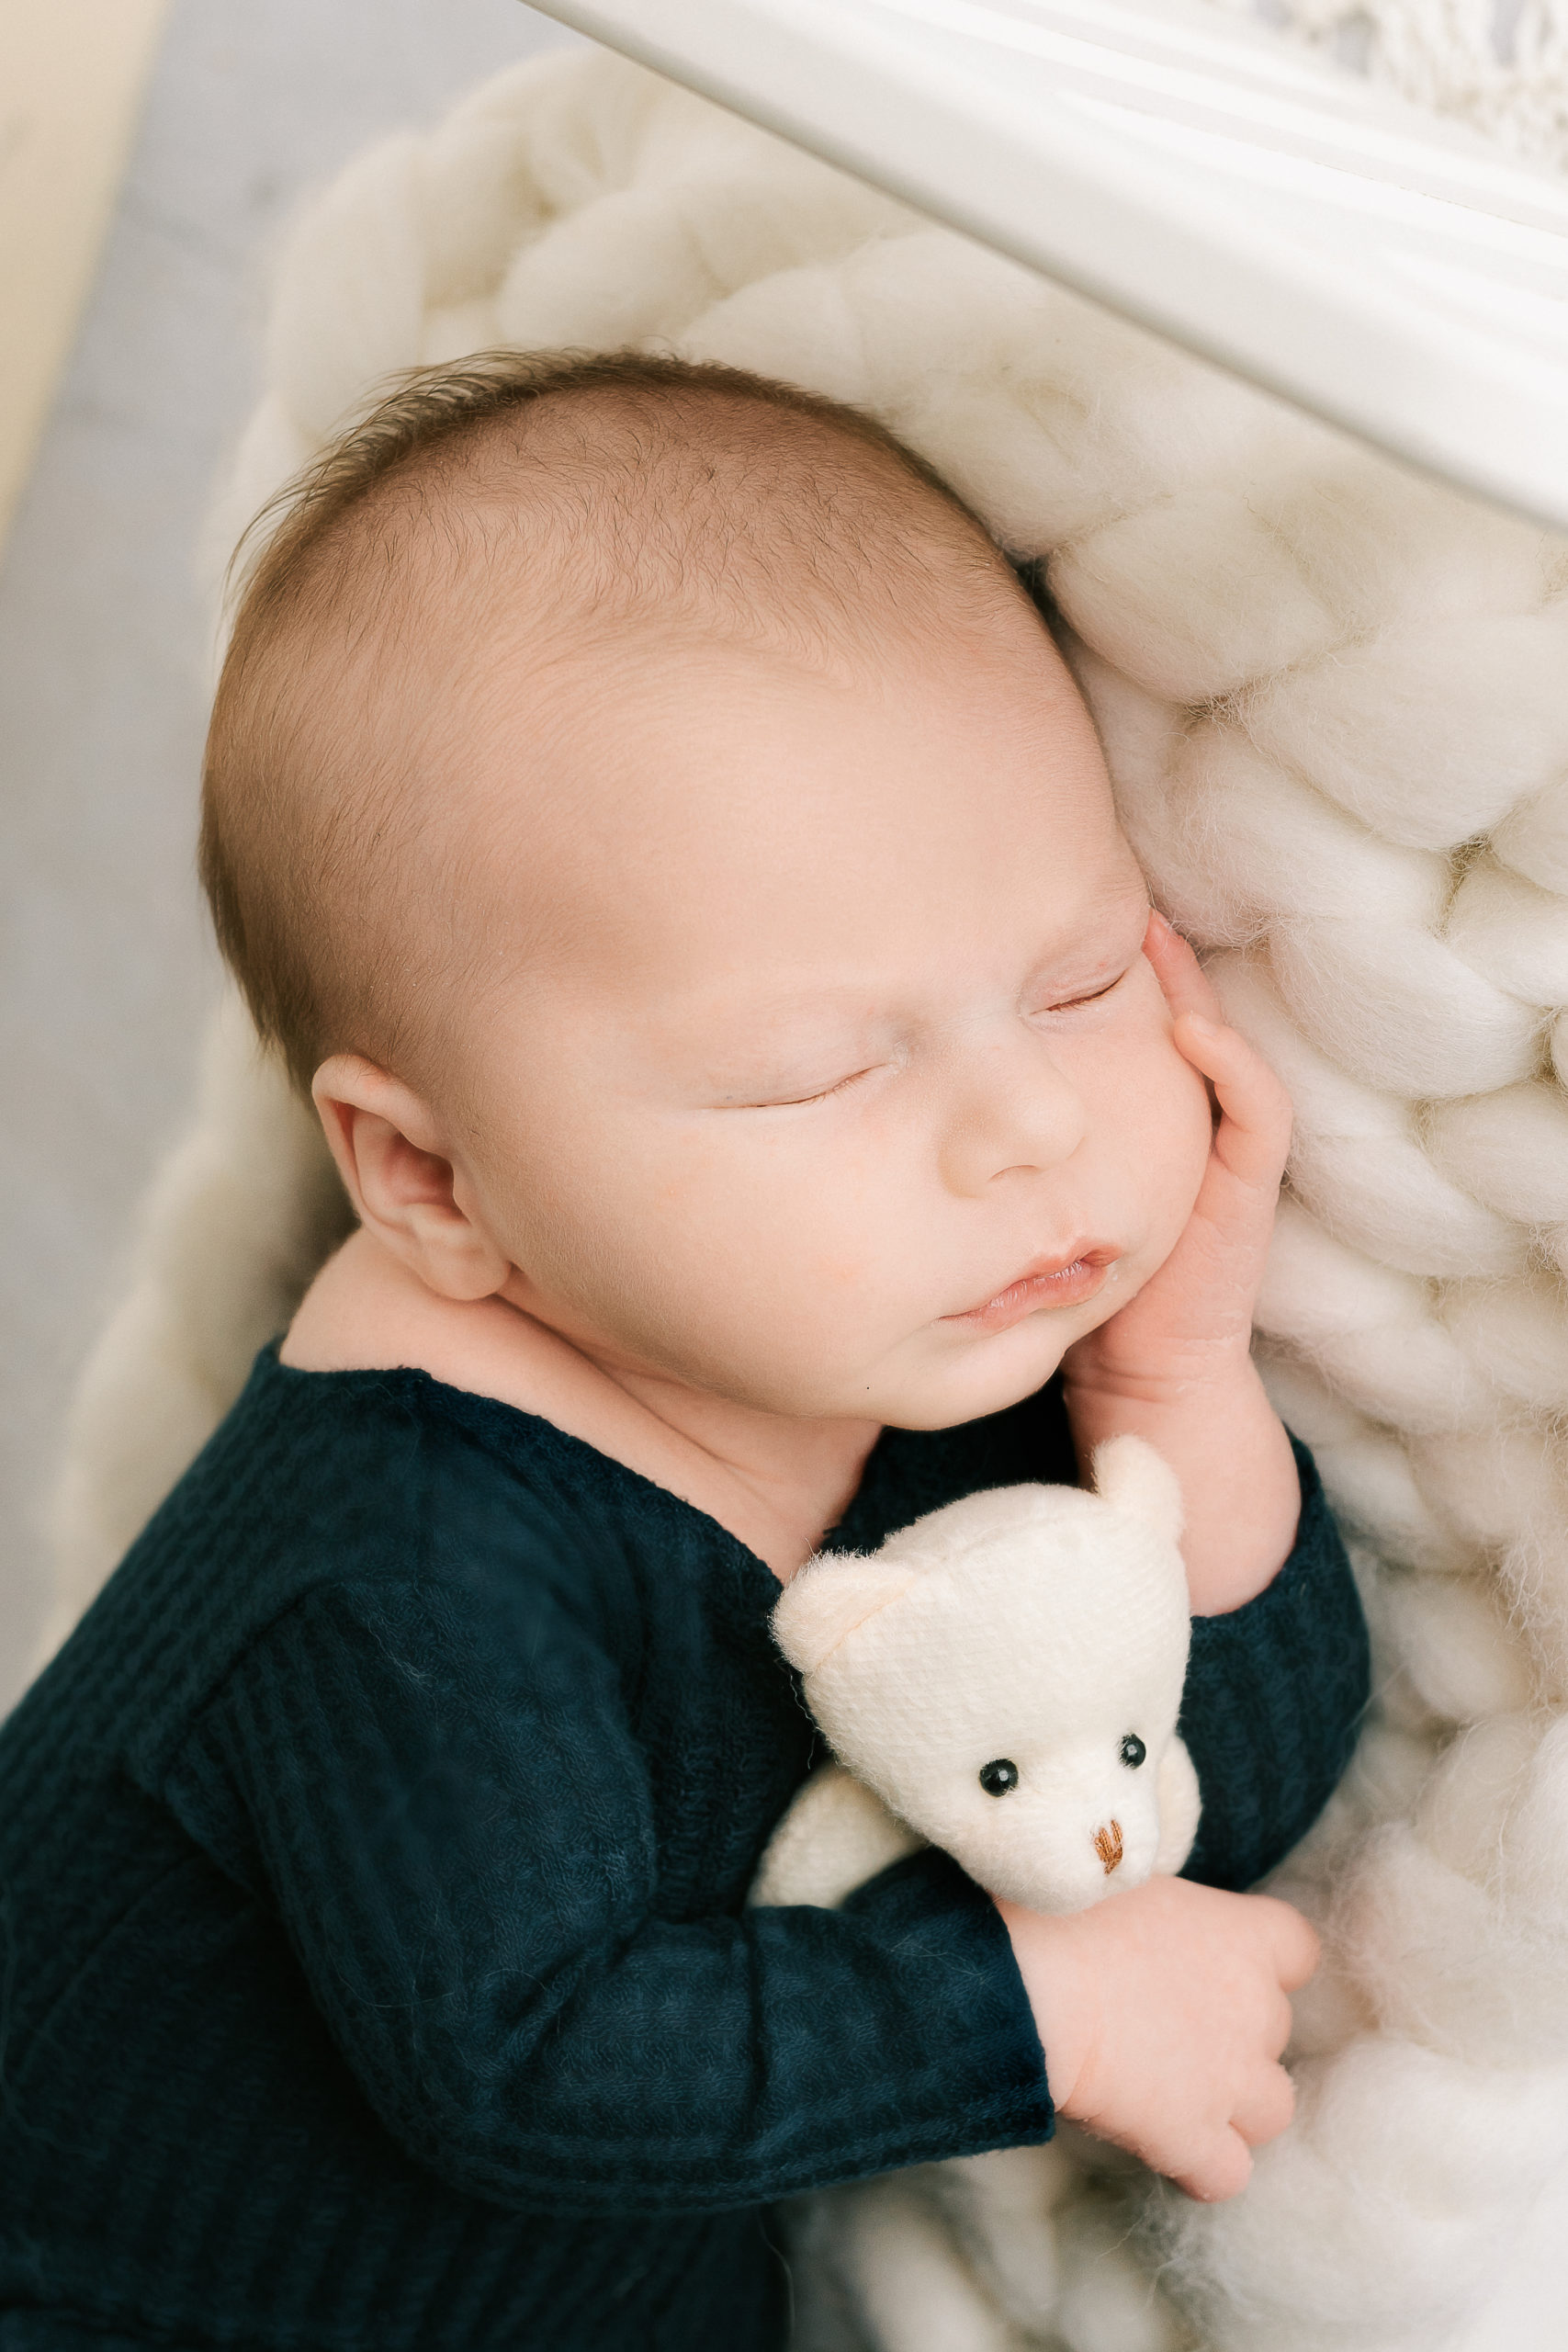 newborn baby boy sleeping with a teddy bear on a white bed